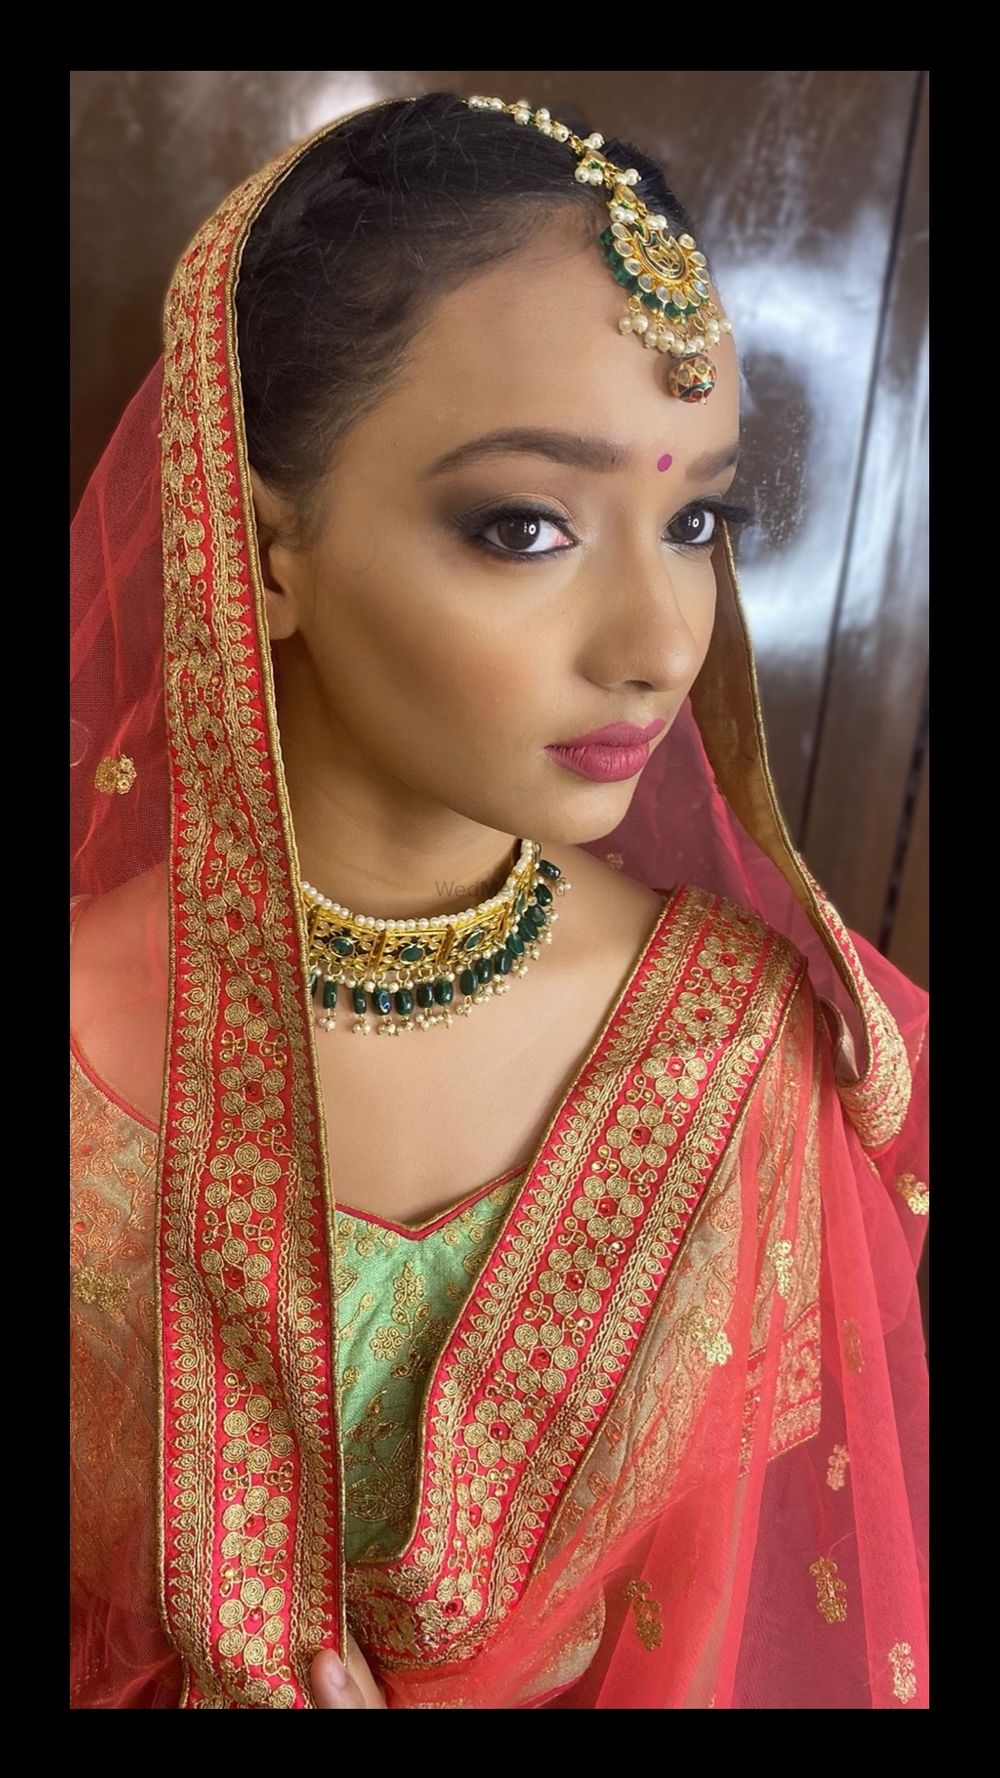 Photo From Brides - By Rashi Gupta Makeovers